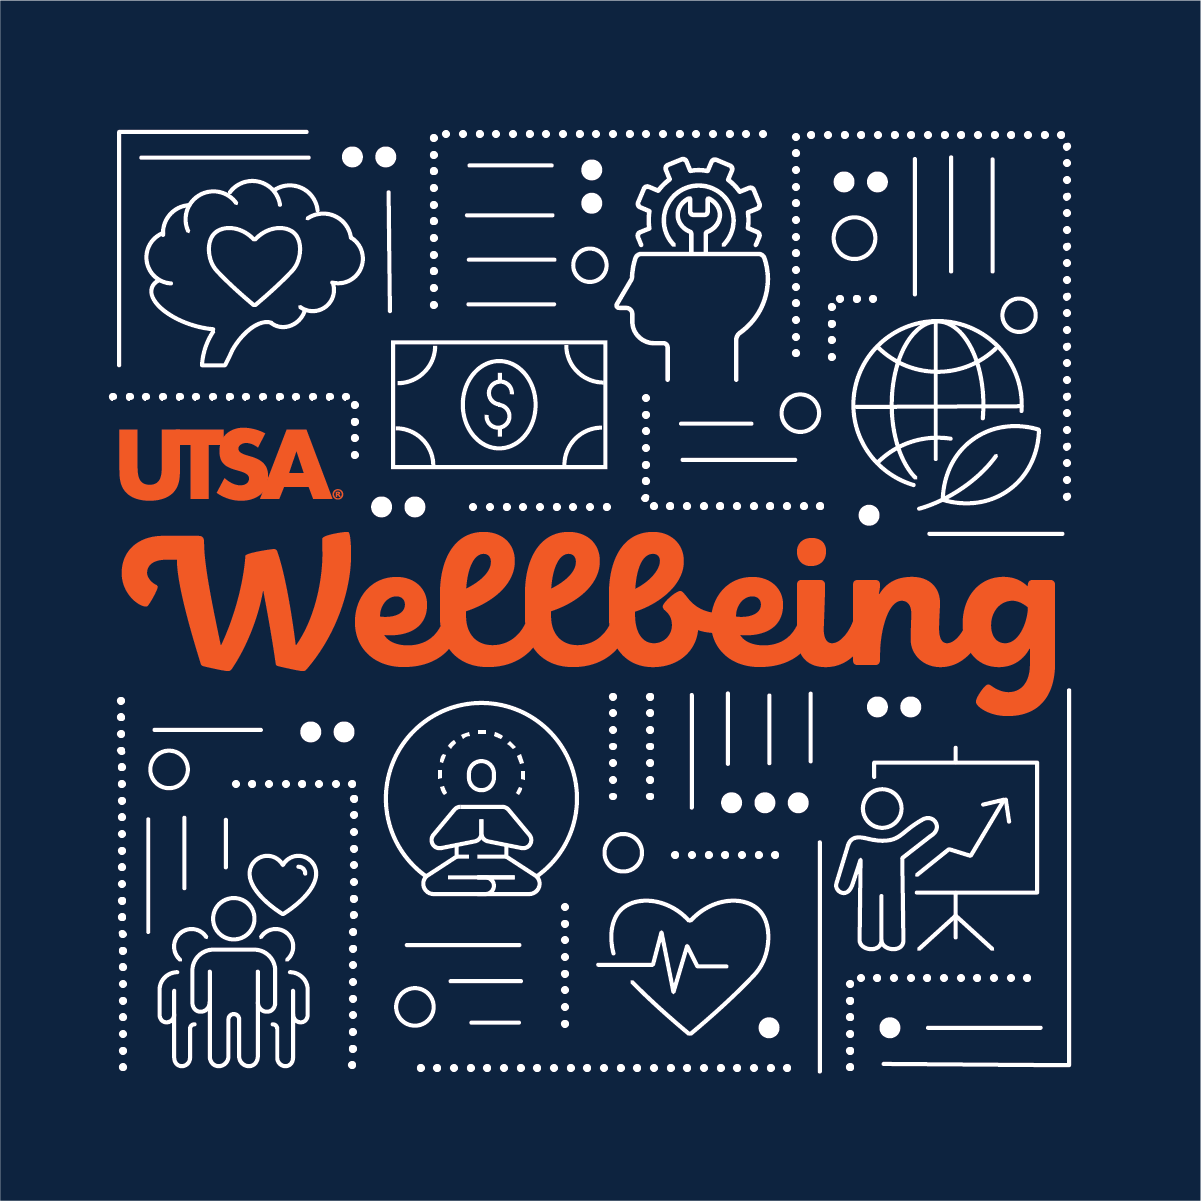 UTSA Wellbeing - eight dimensions